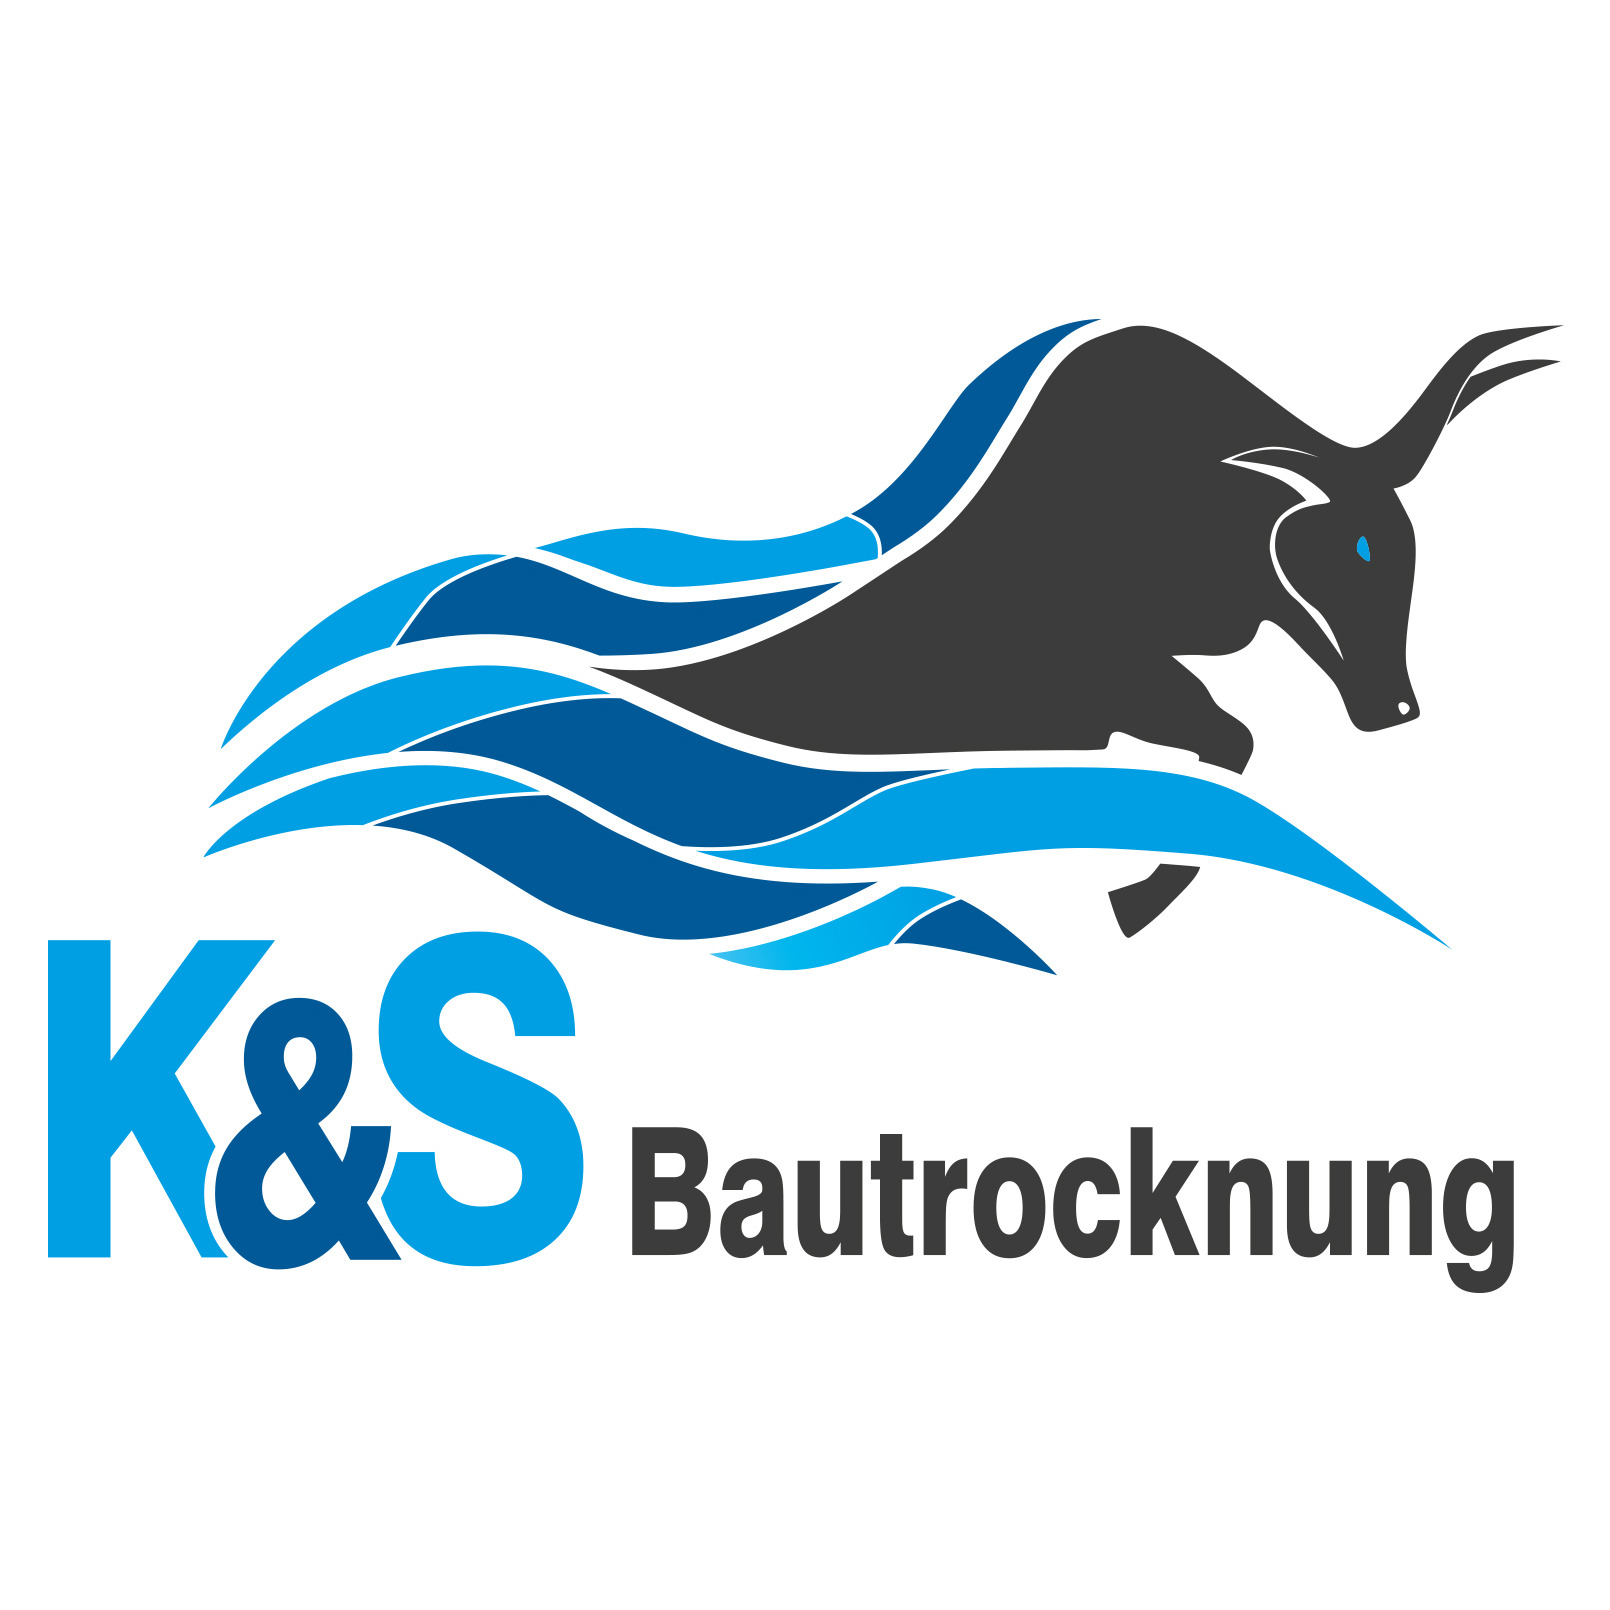 K&S Bautrocknung Logo